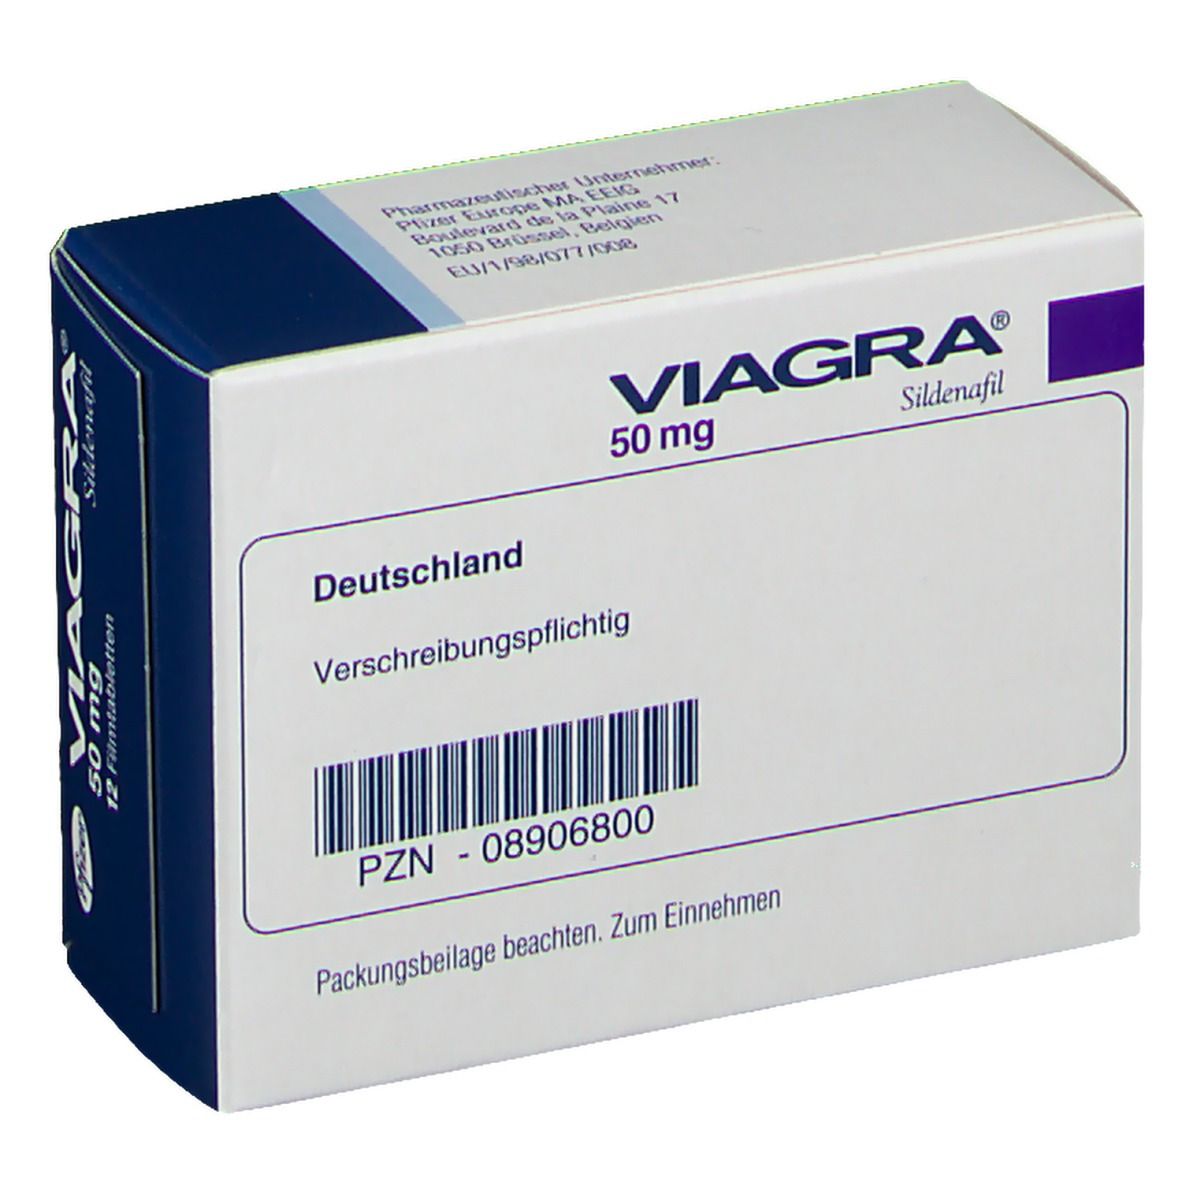 Viagra® 50 mg